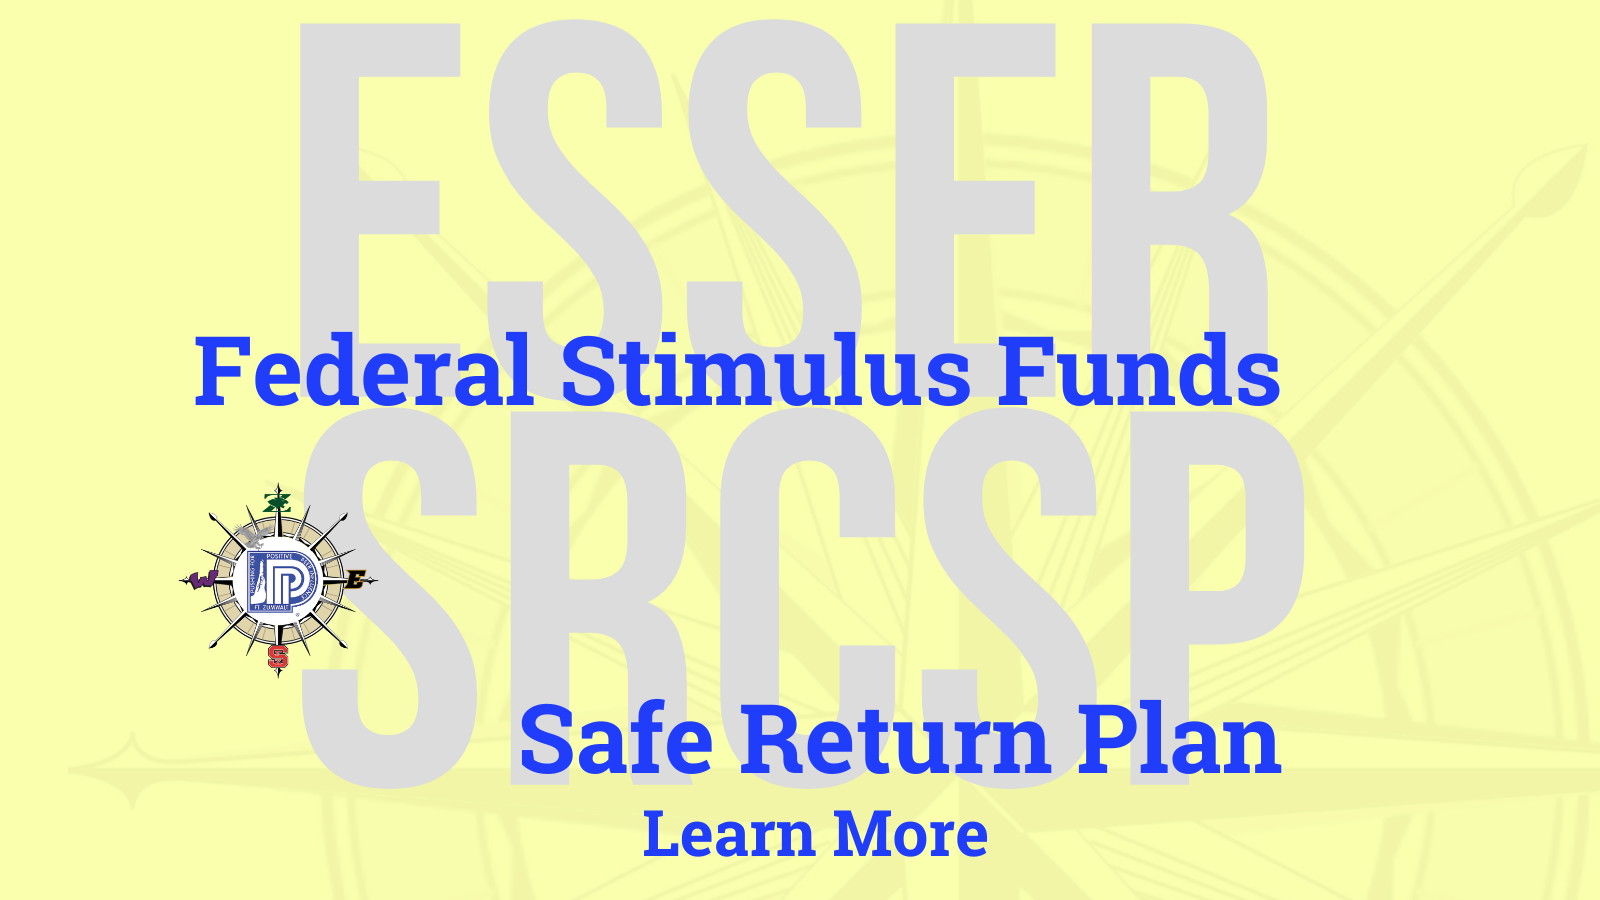 Federal Stimulus Funds & Safe Return Plan